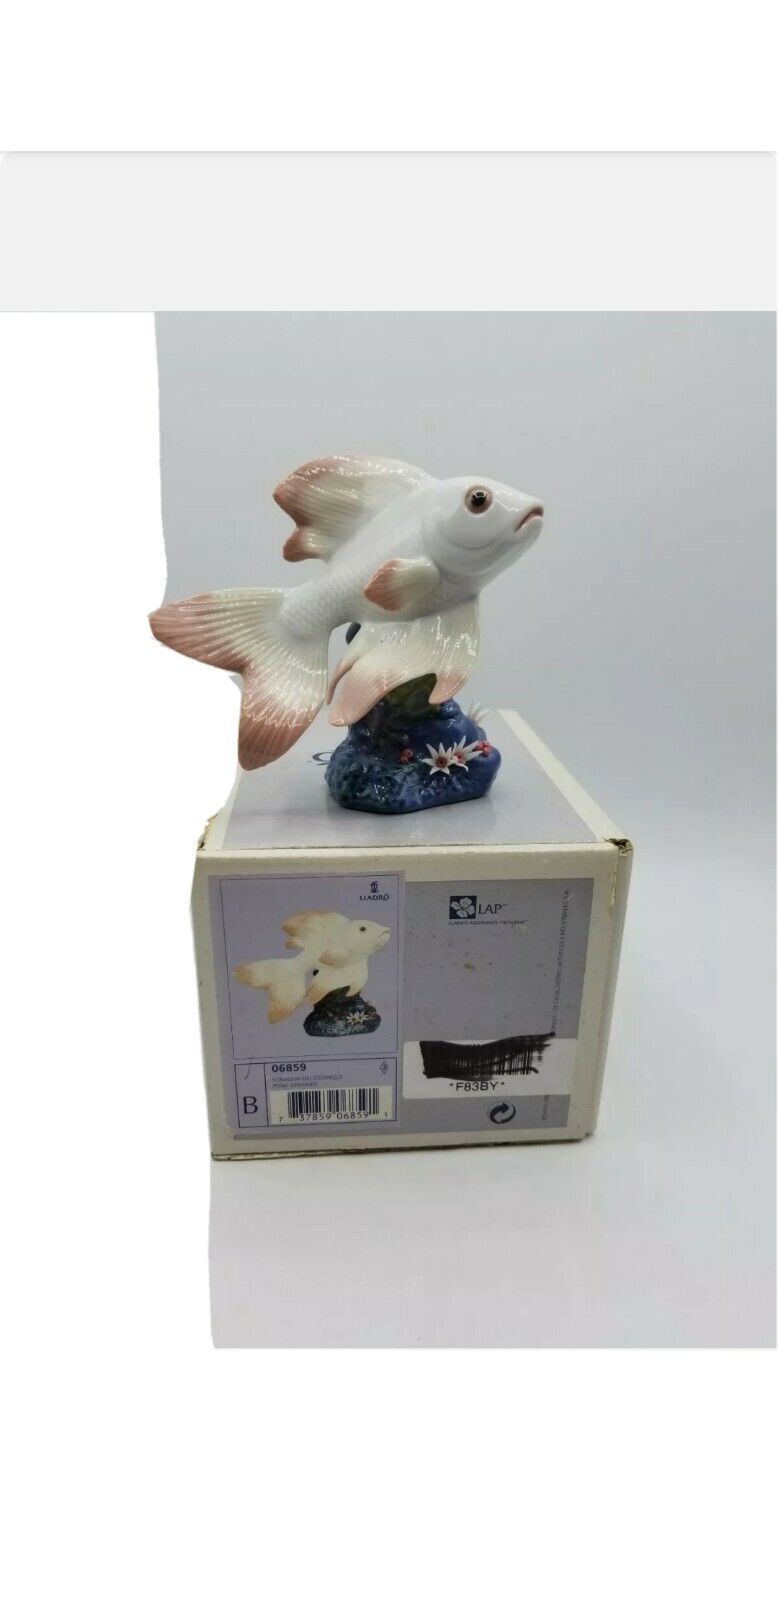 Lladro Pond Dreamer Figurine 6859 w/ Box